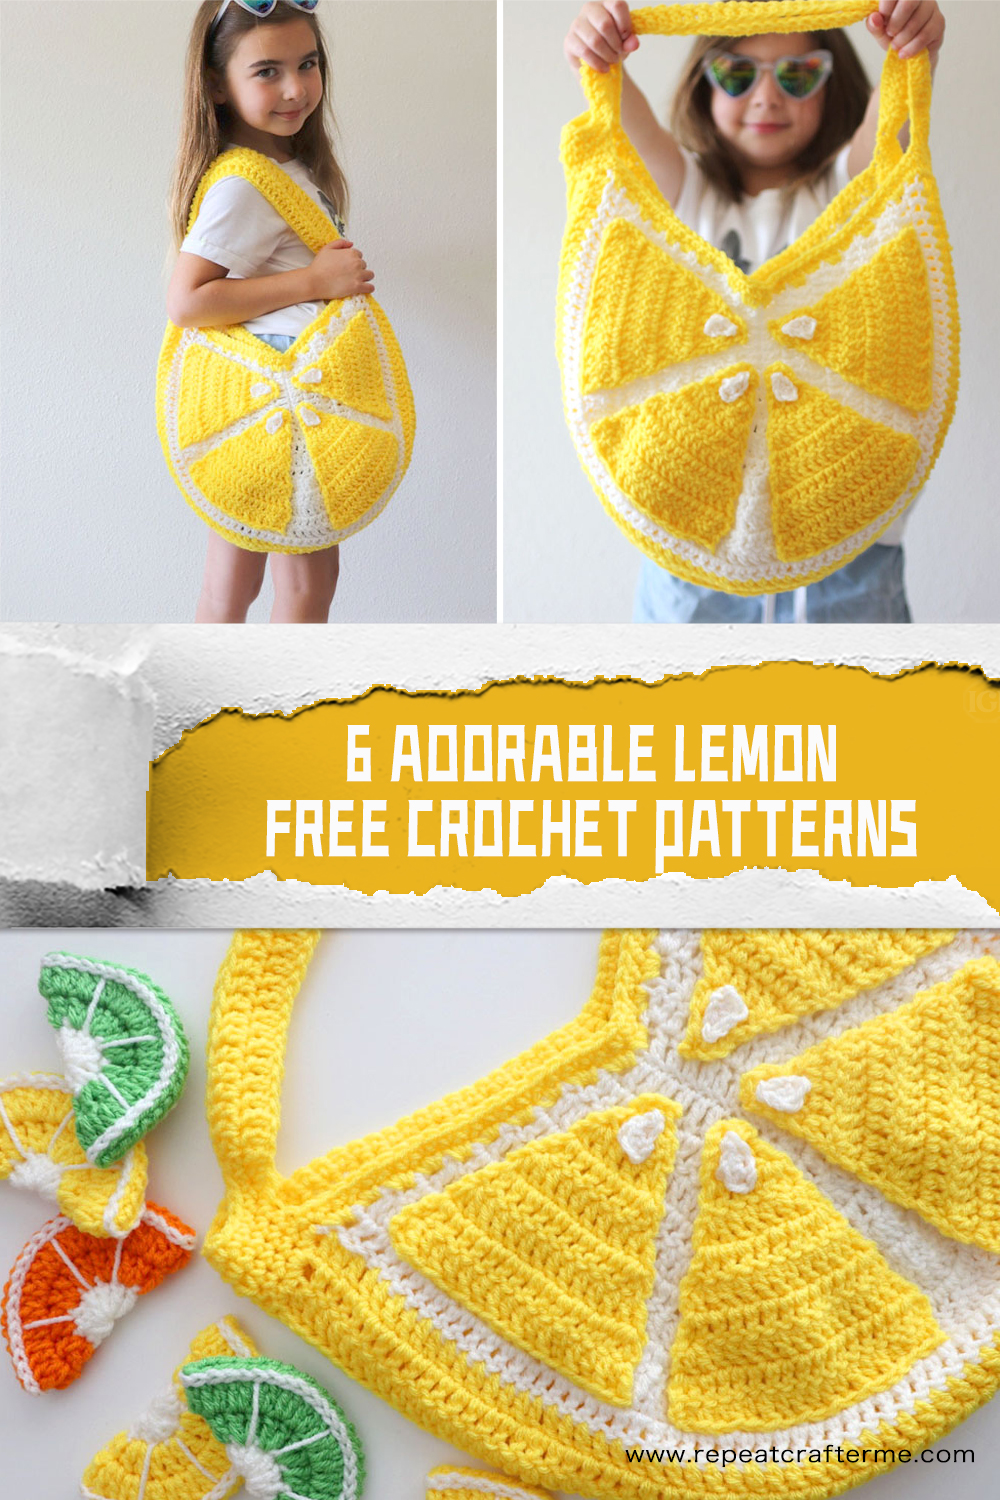 6 Adorable FREE Lemon Crochet Patterns